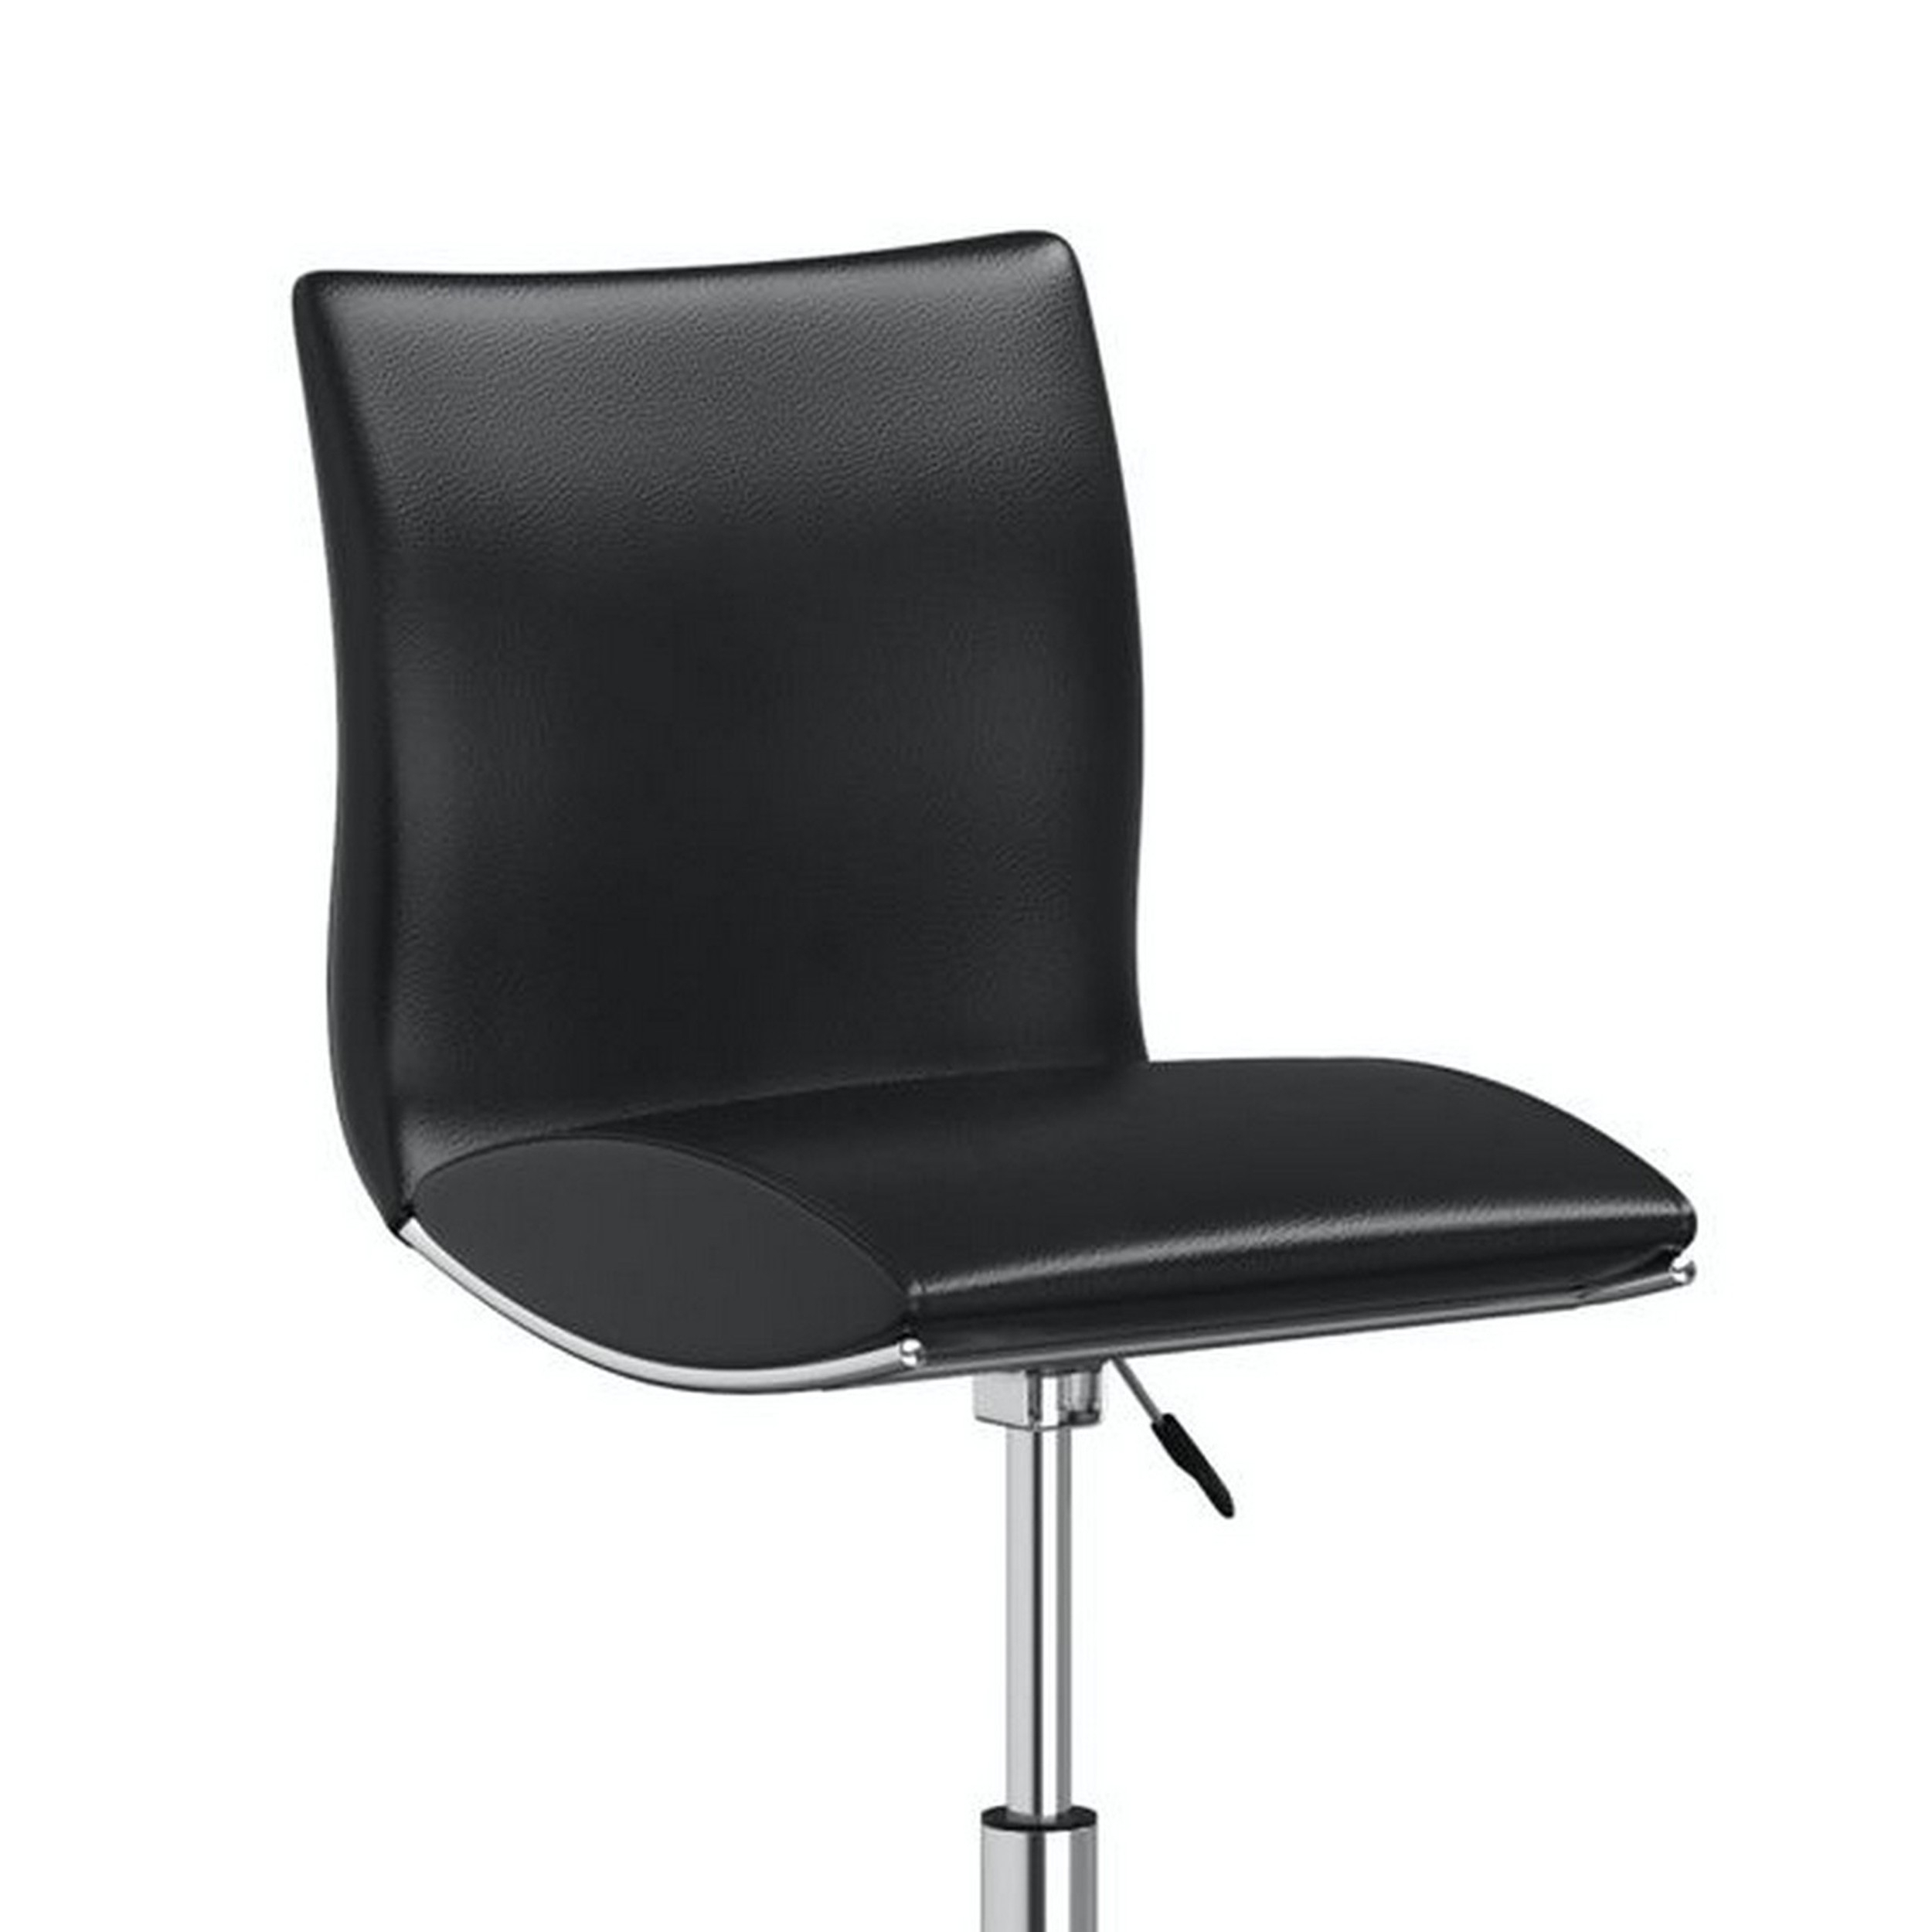 Deko 26-31 Inch Adjustable Height Barstool Chair, Set Of 2, Chrome Black Faux Leather - Saltoro Sherpi